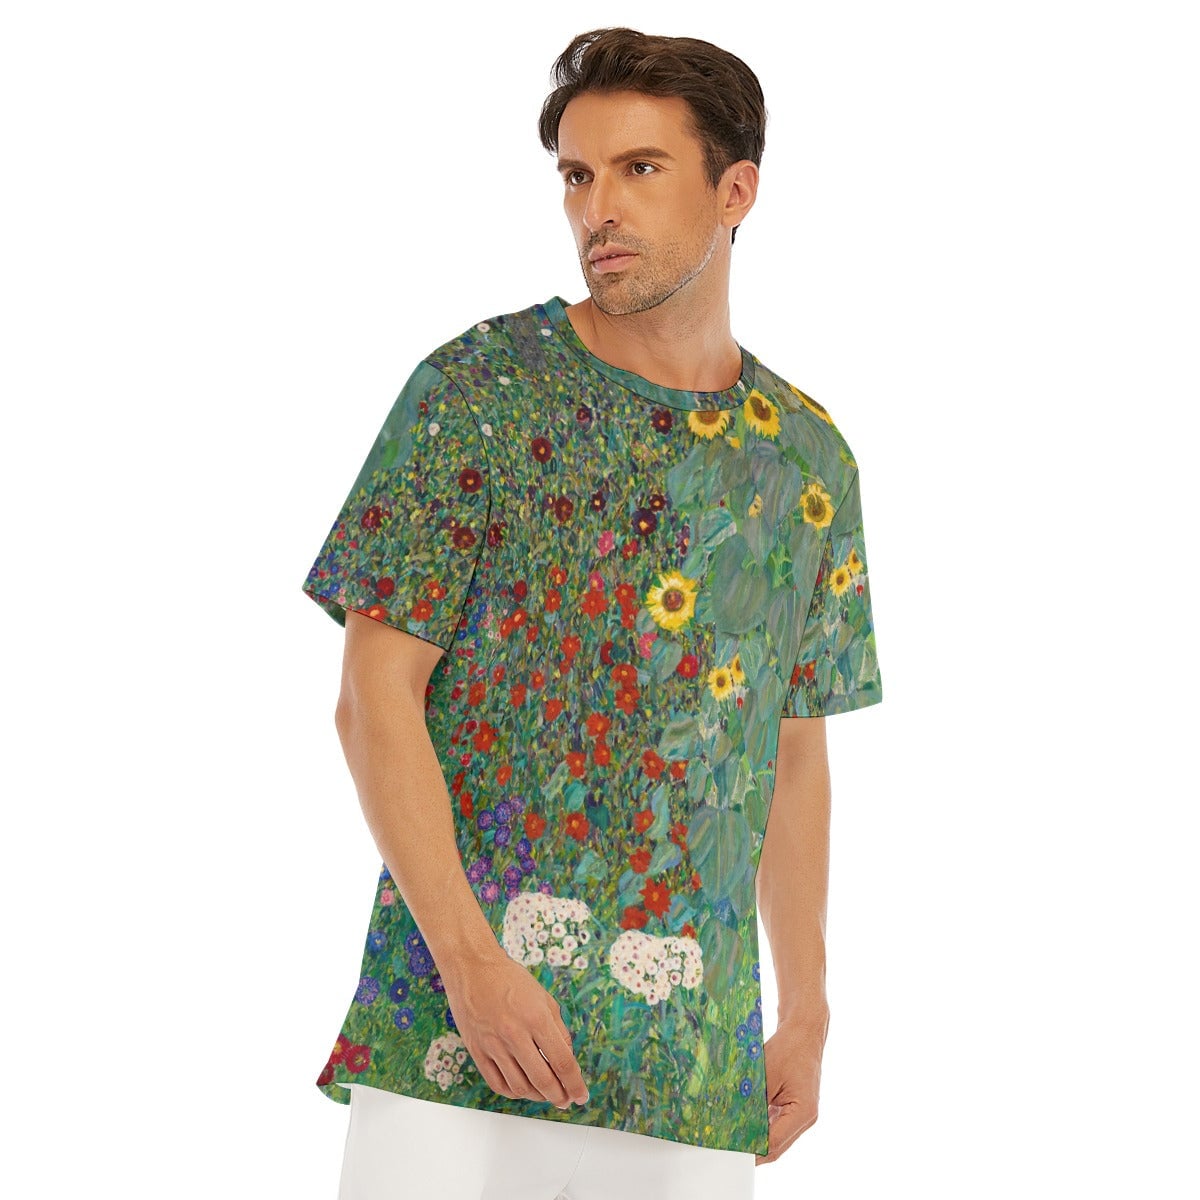 Gustav Klimt’s Farm Garden with Sunflowers T-Shirt